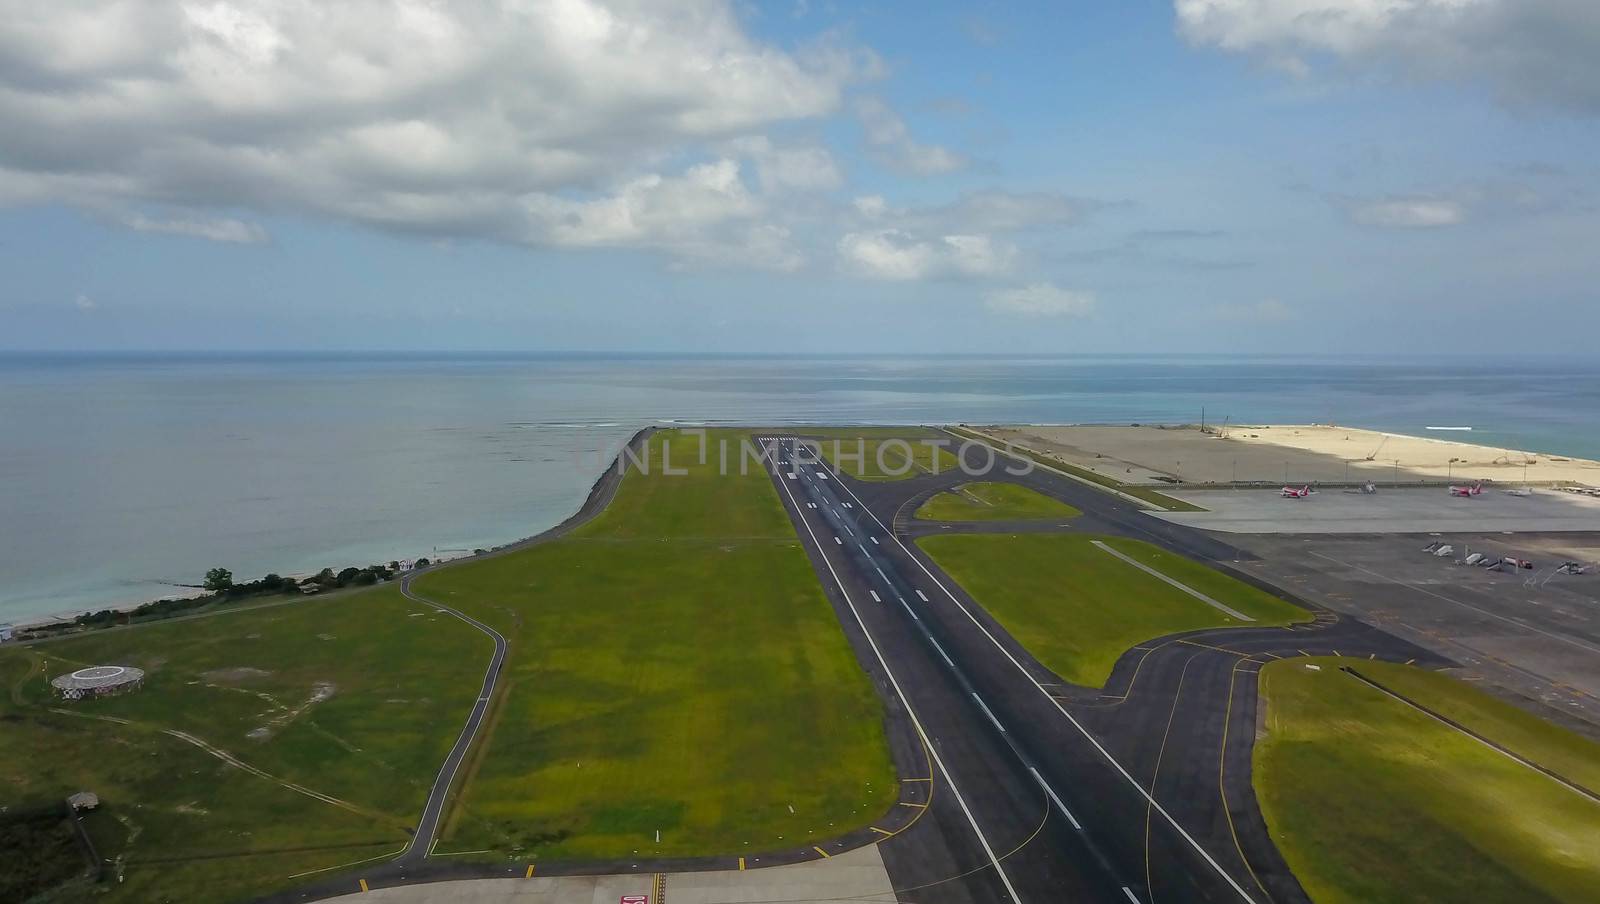 Runway at Denpasar International Airport in Bali, Indonesia. Runway reaching into the ocean. Aerial view to Ngurah Rai airport by Sanatana2008